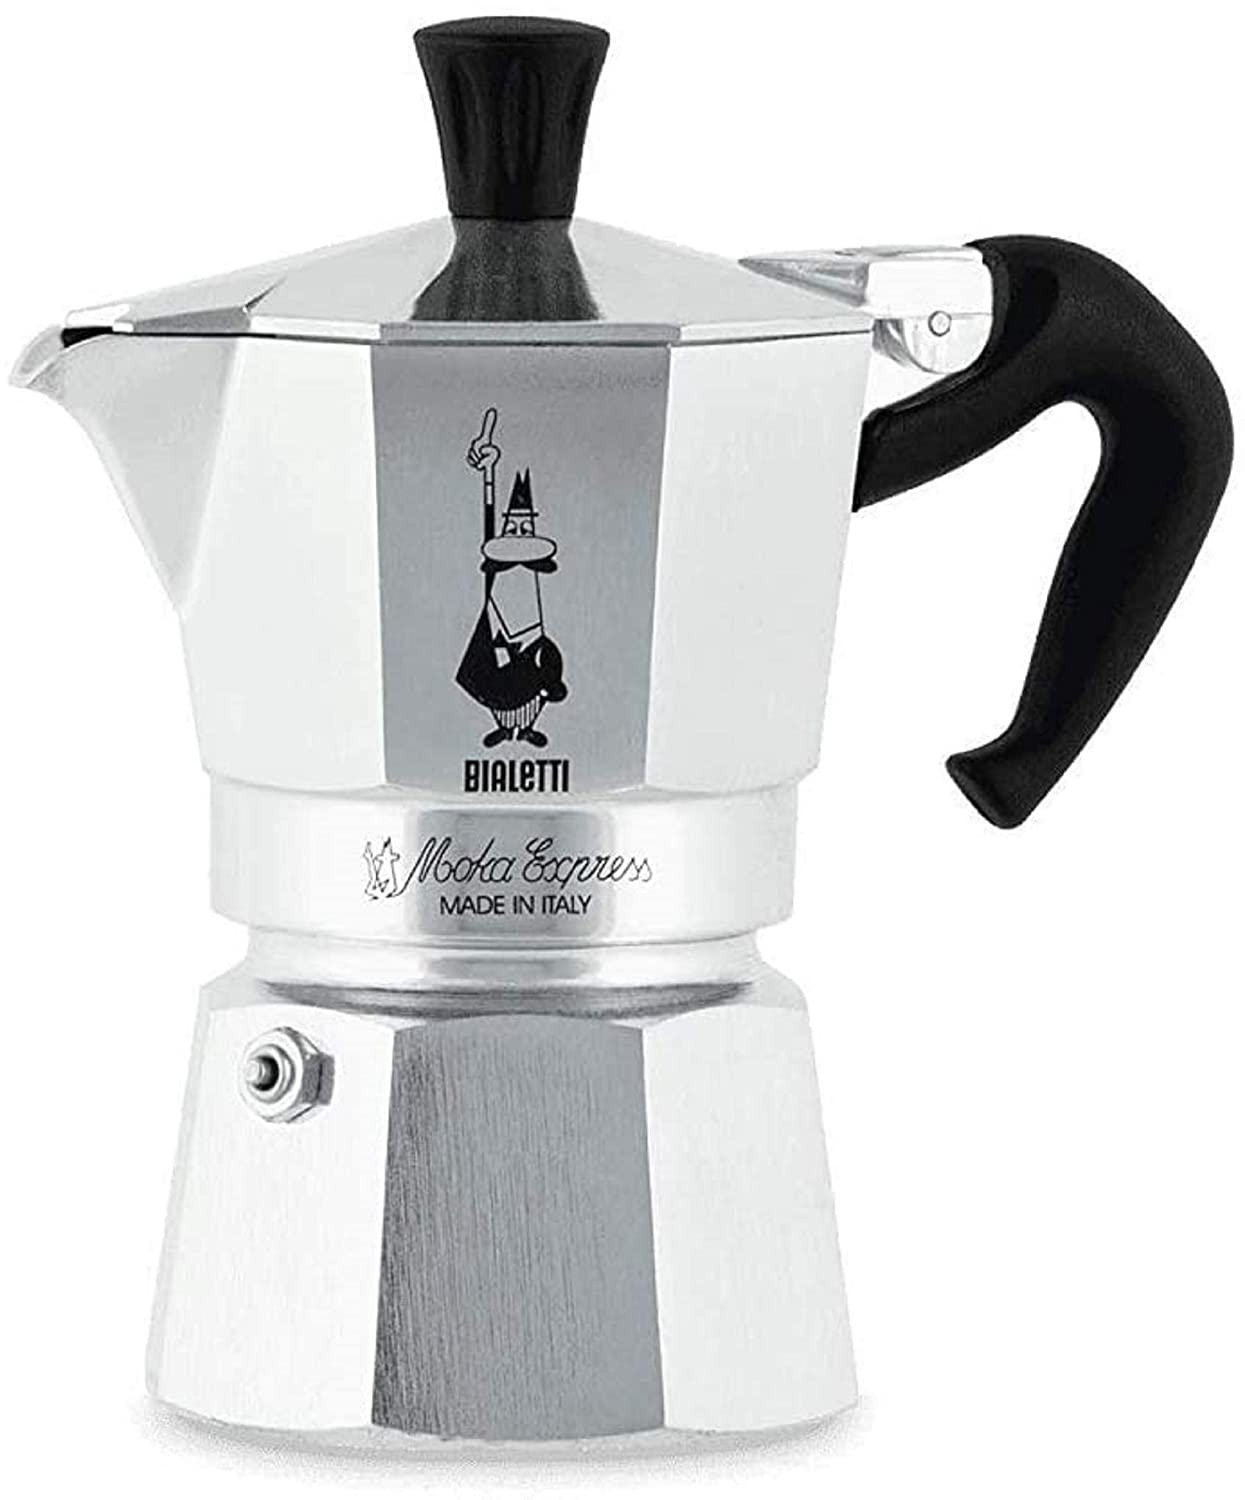 Bialetti Moka Express 2 Cup Coffee Maker